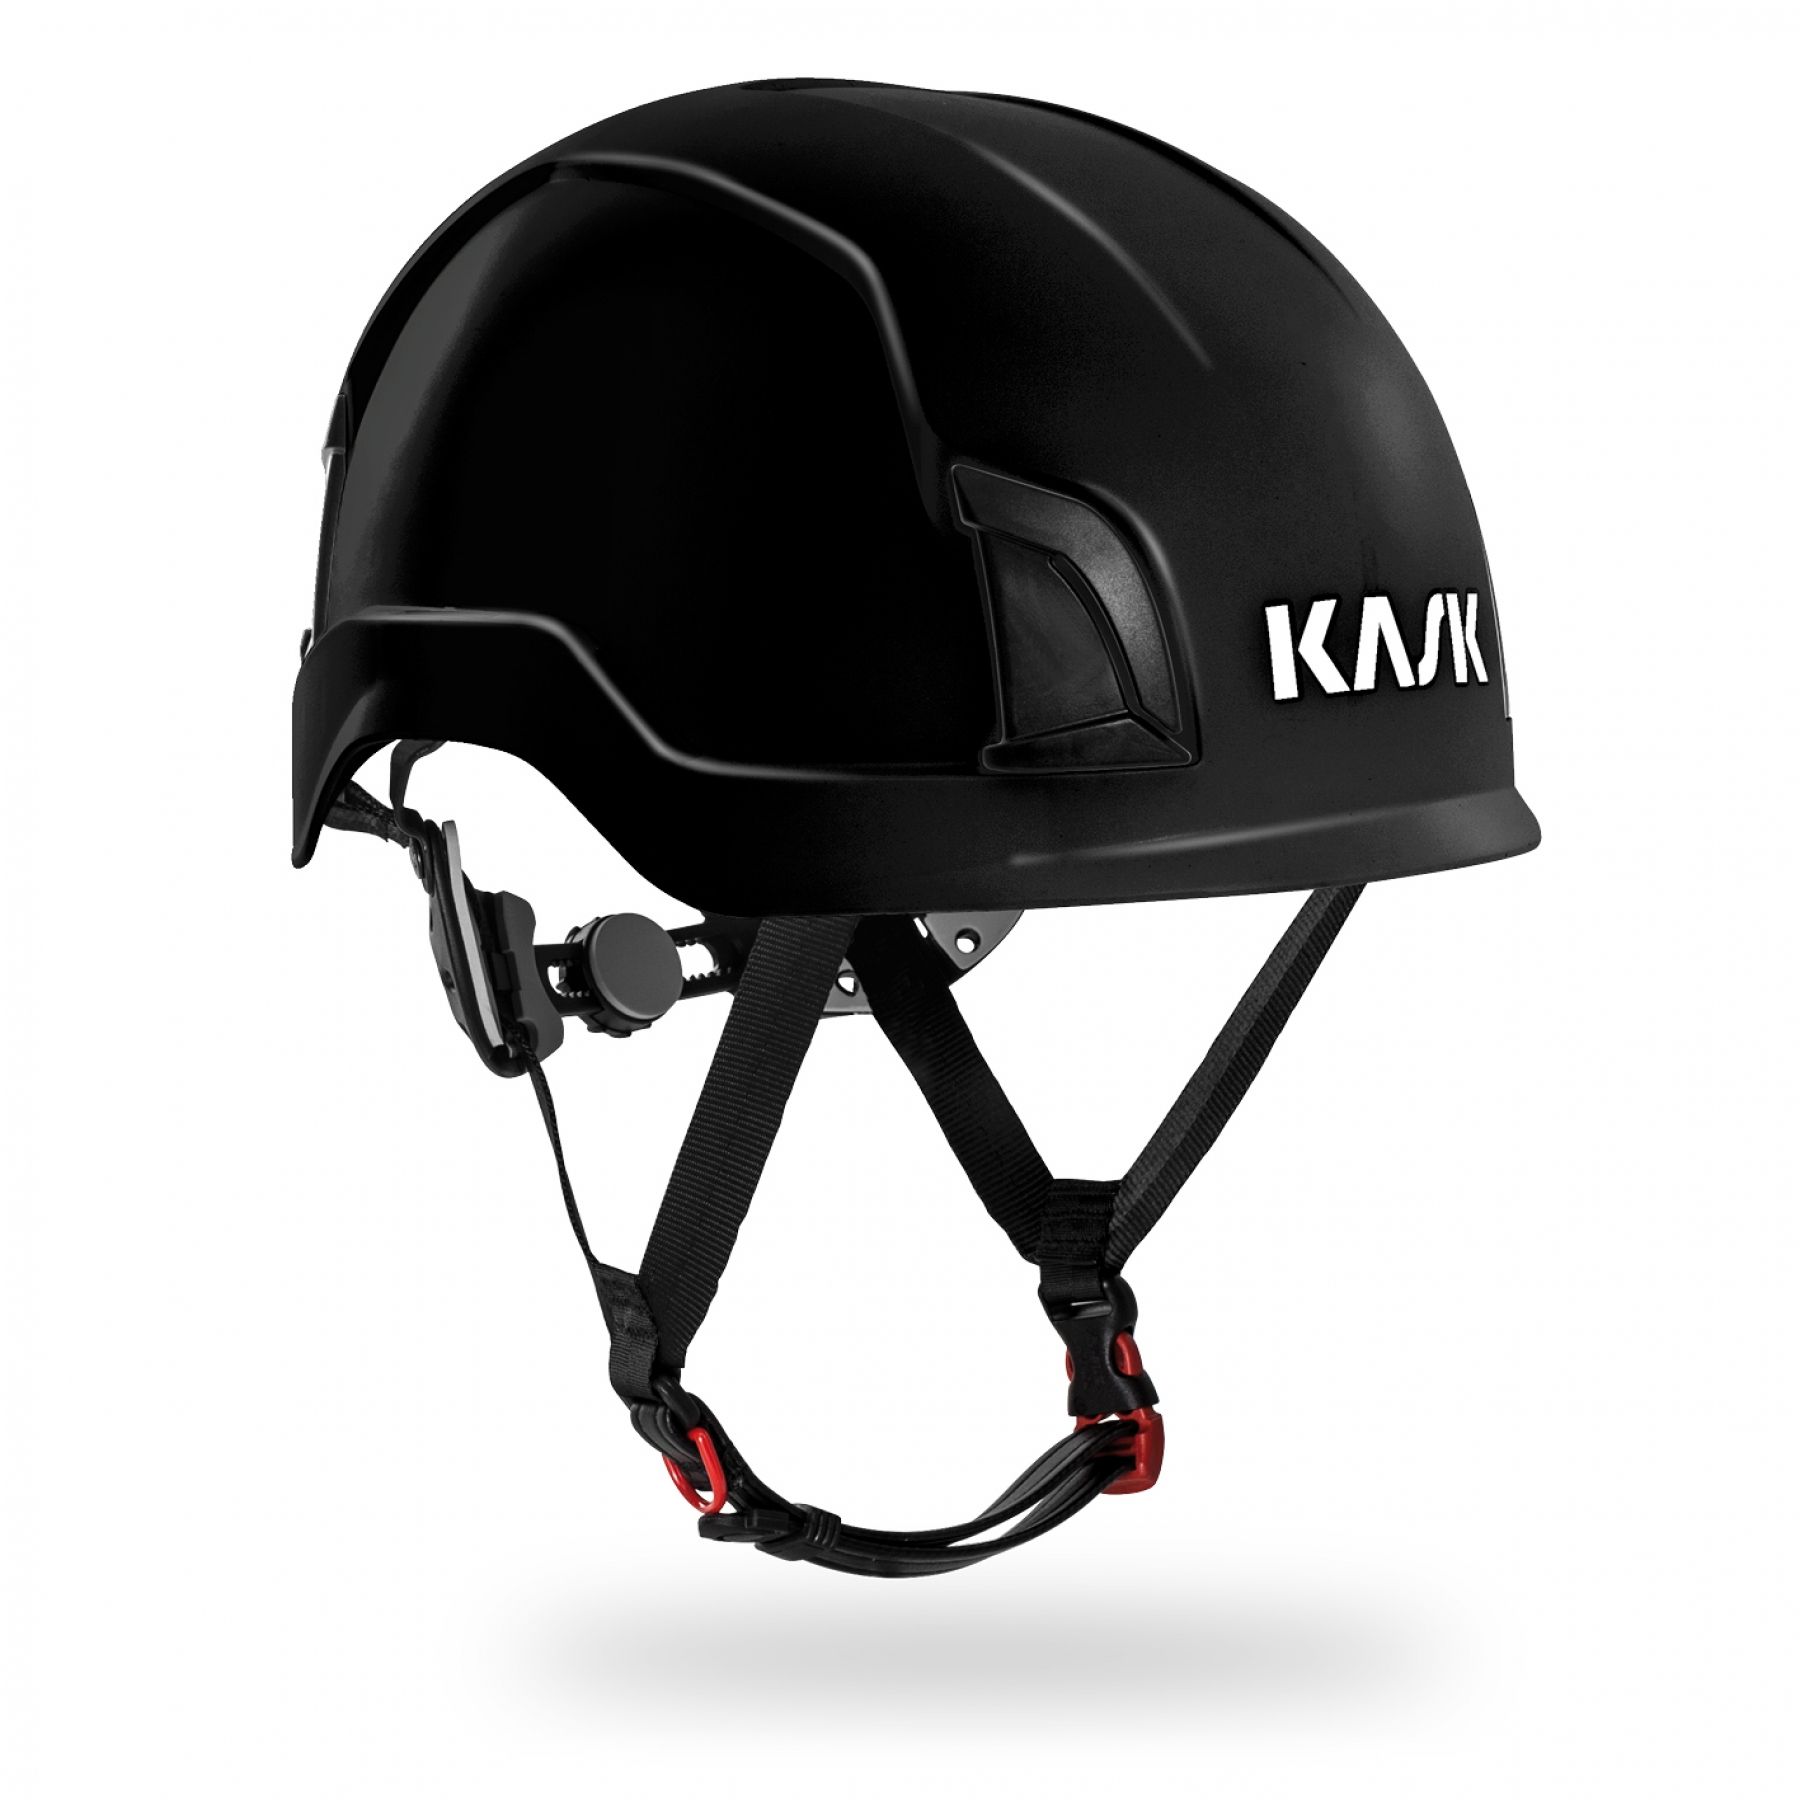 Kask Schutzhelm Zenith, Rigger Helm, schwarz, nach EN397 + EN50365 Norm mit Kinnriemen & Knebelverschluss